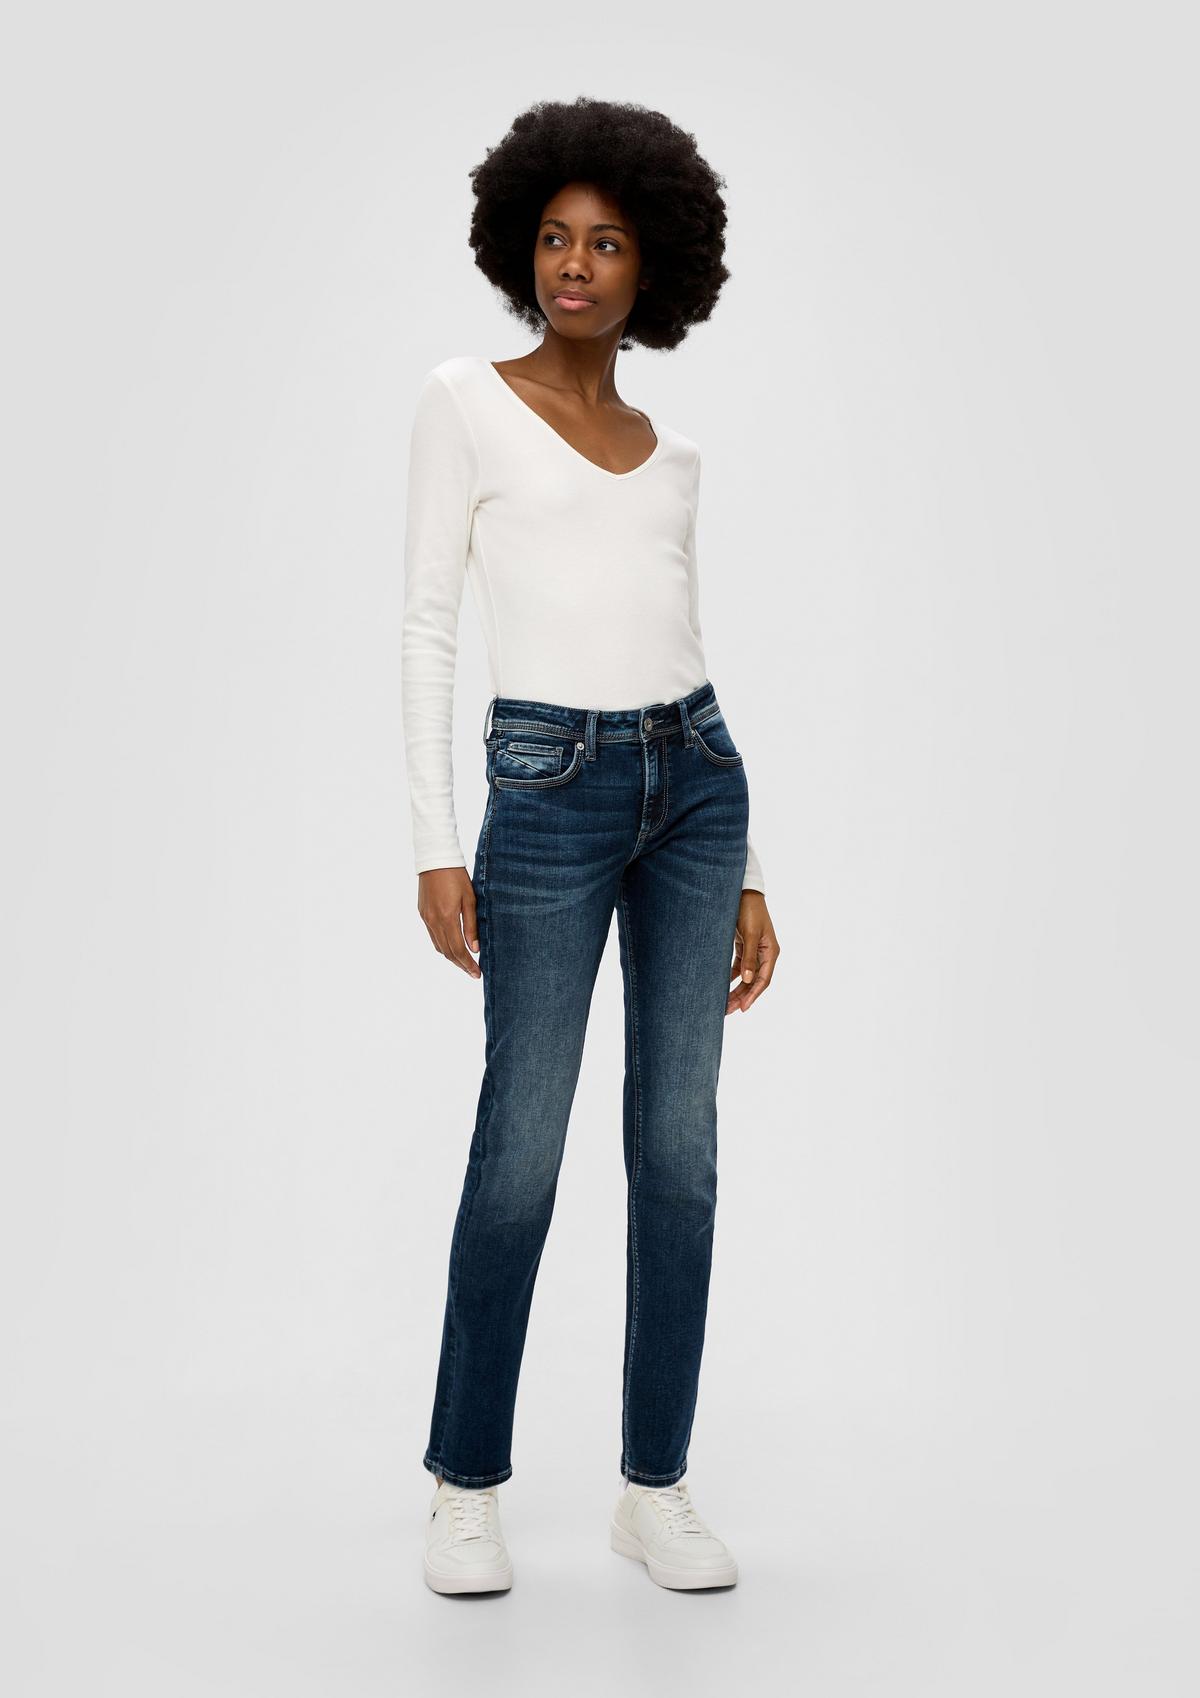 s.Oliver Catie jeans / slim fit / mid rise / slim leg